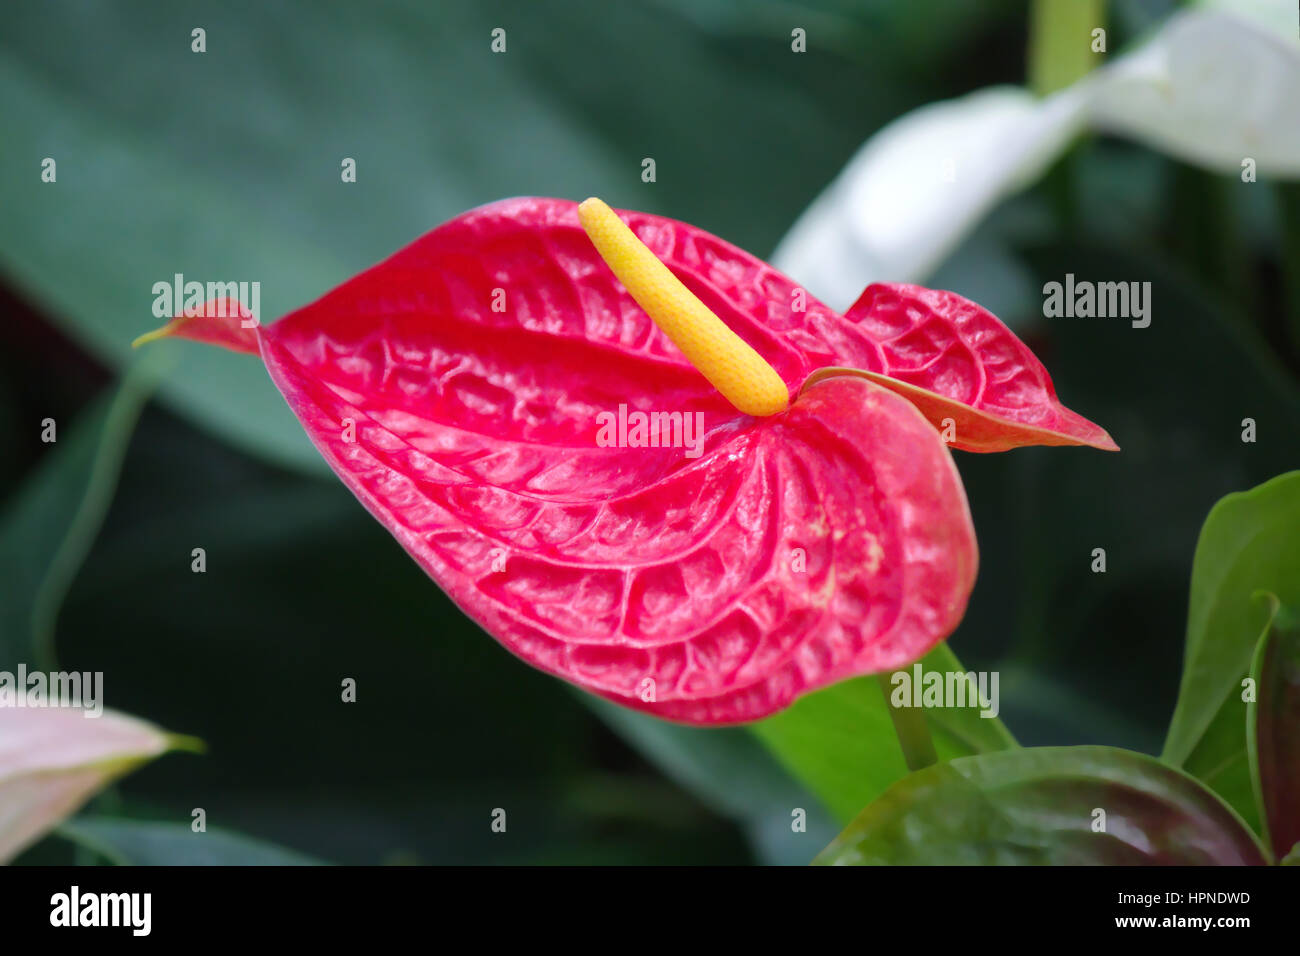 Anthurium or Spadix flower in the Garden Stock Photo